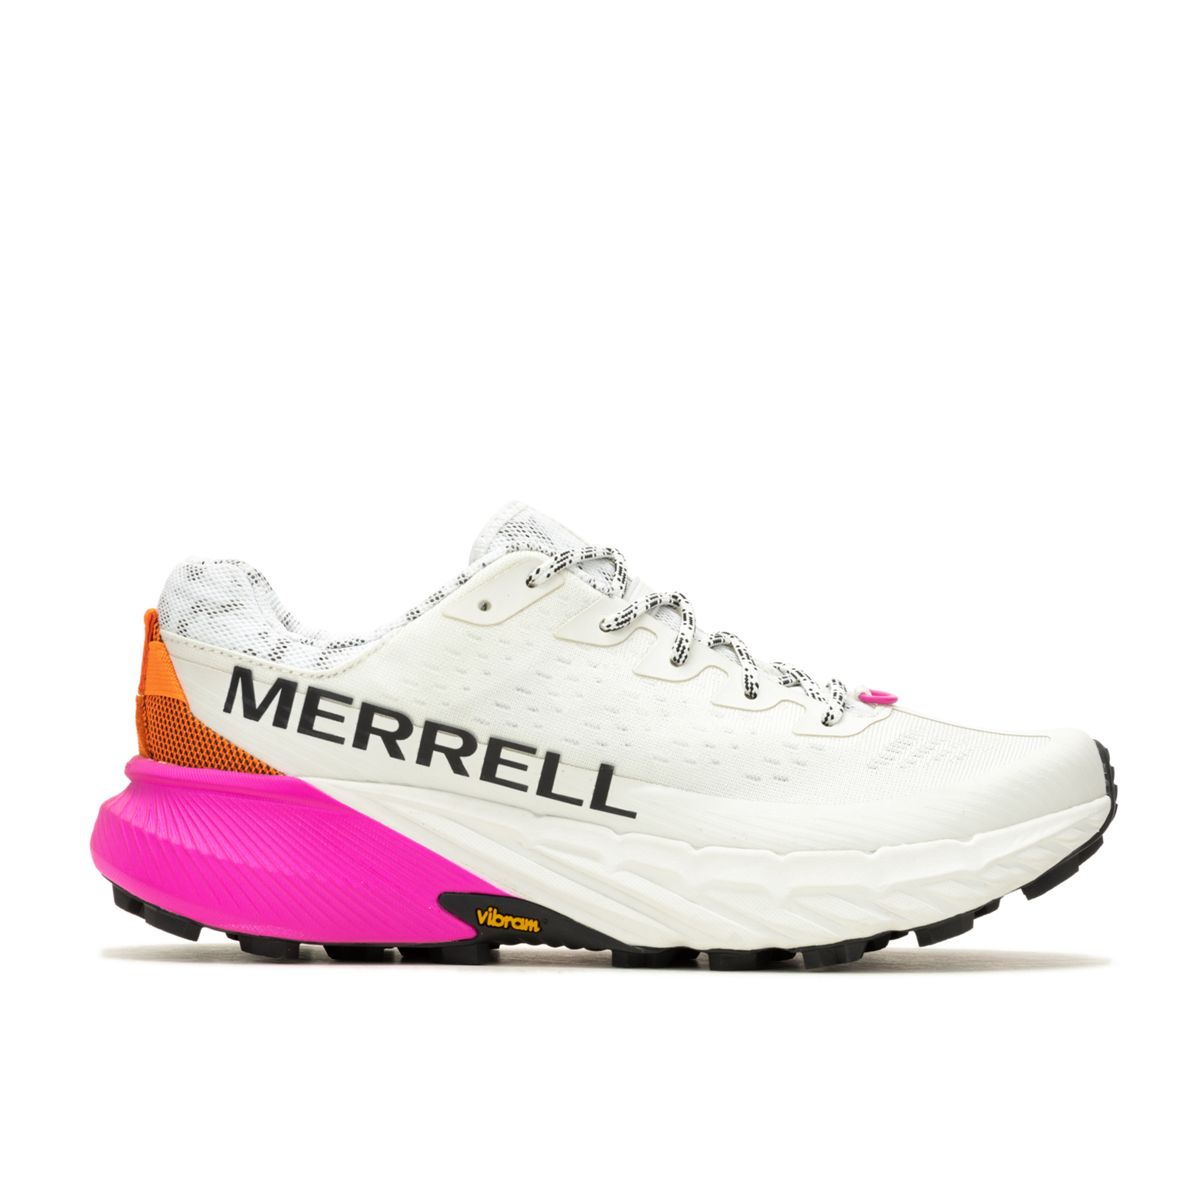 Merrell Agility Peak 5 M special offer